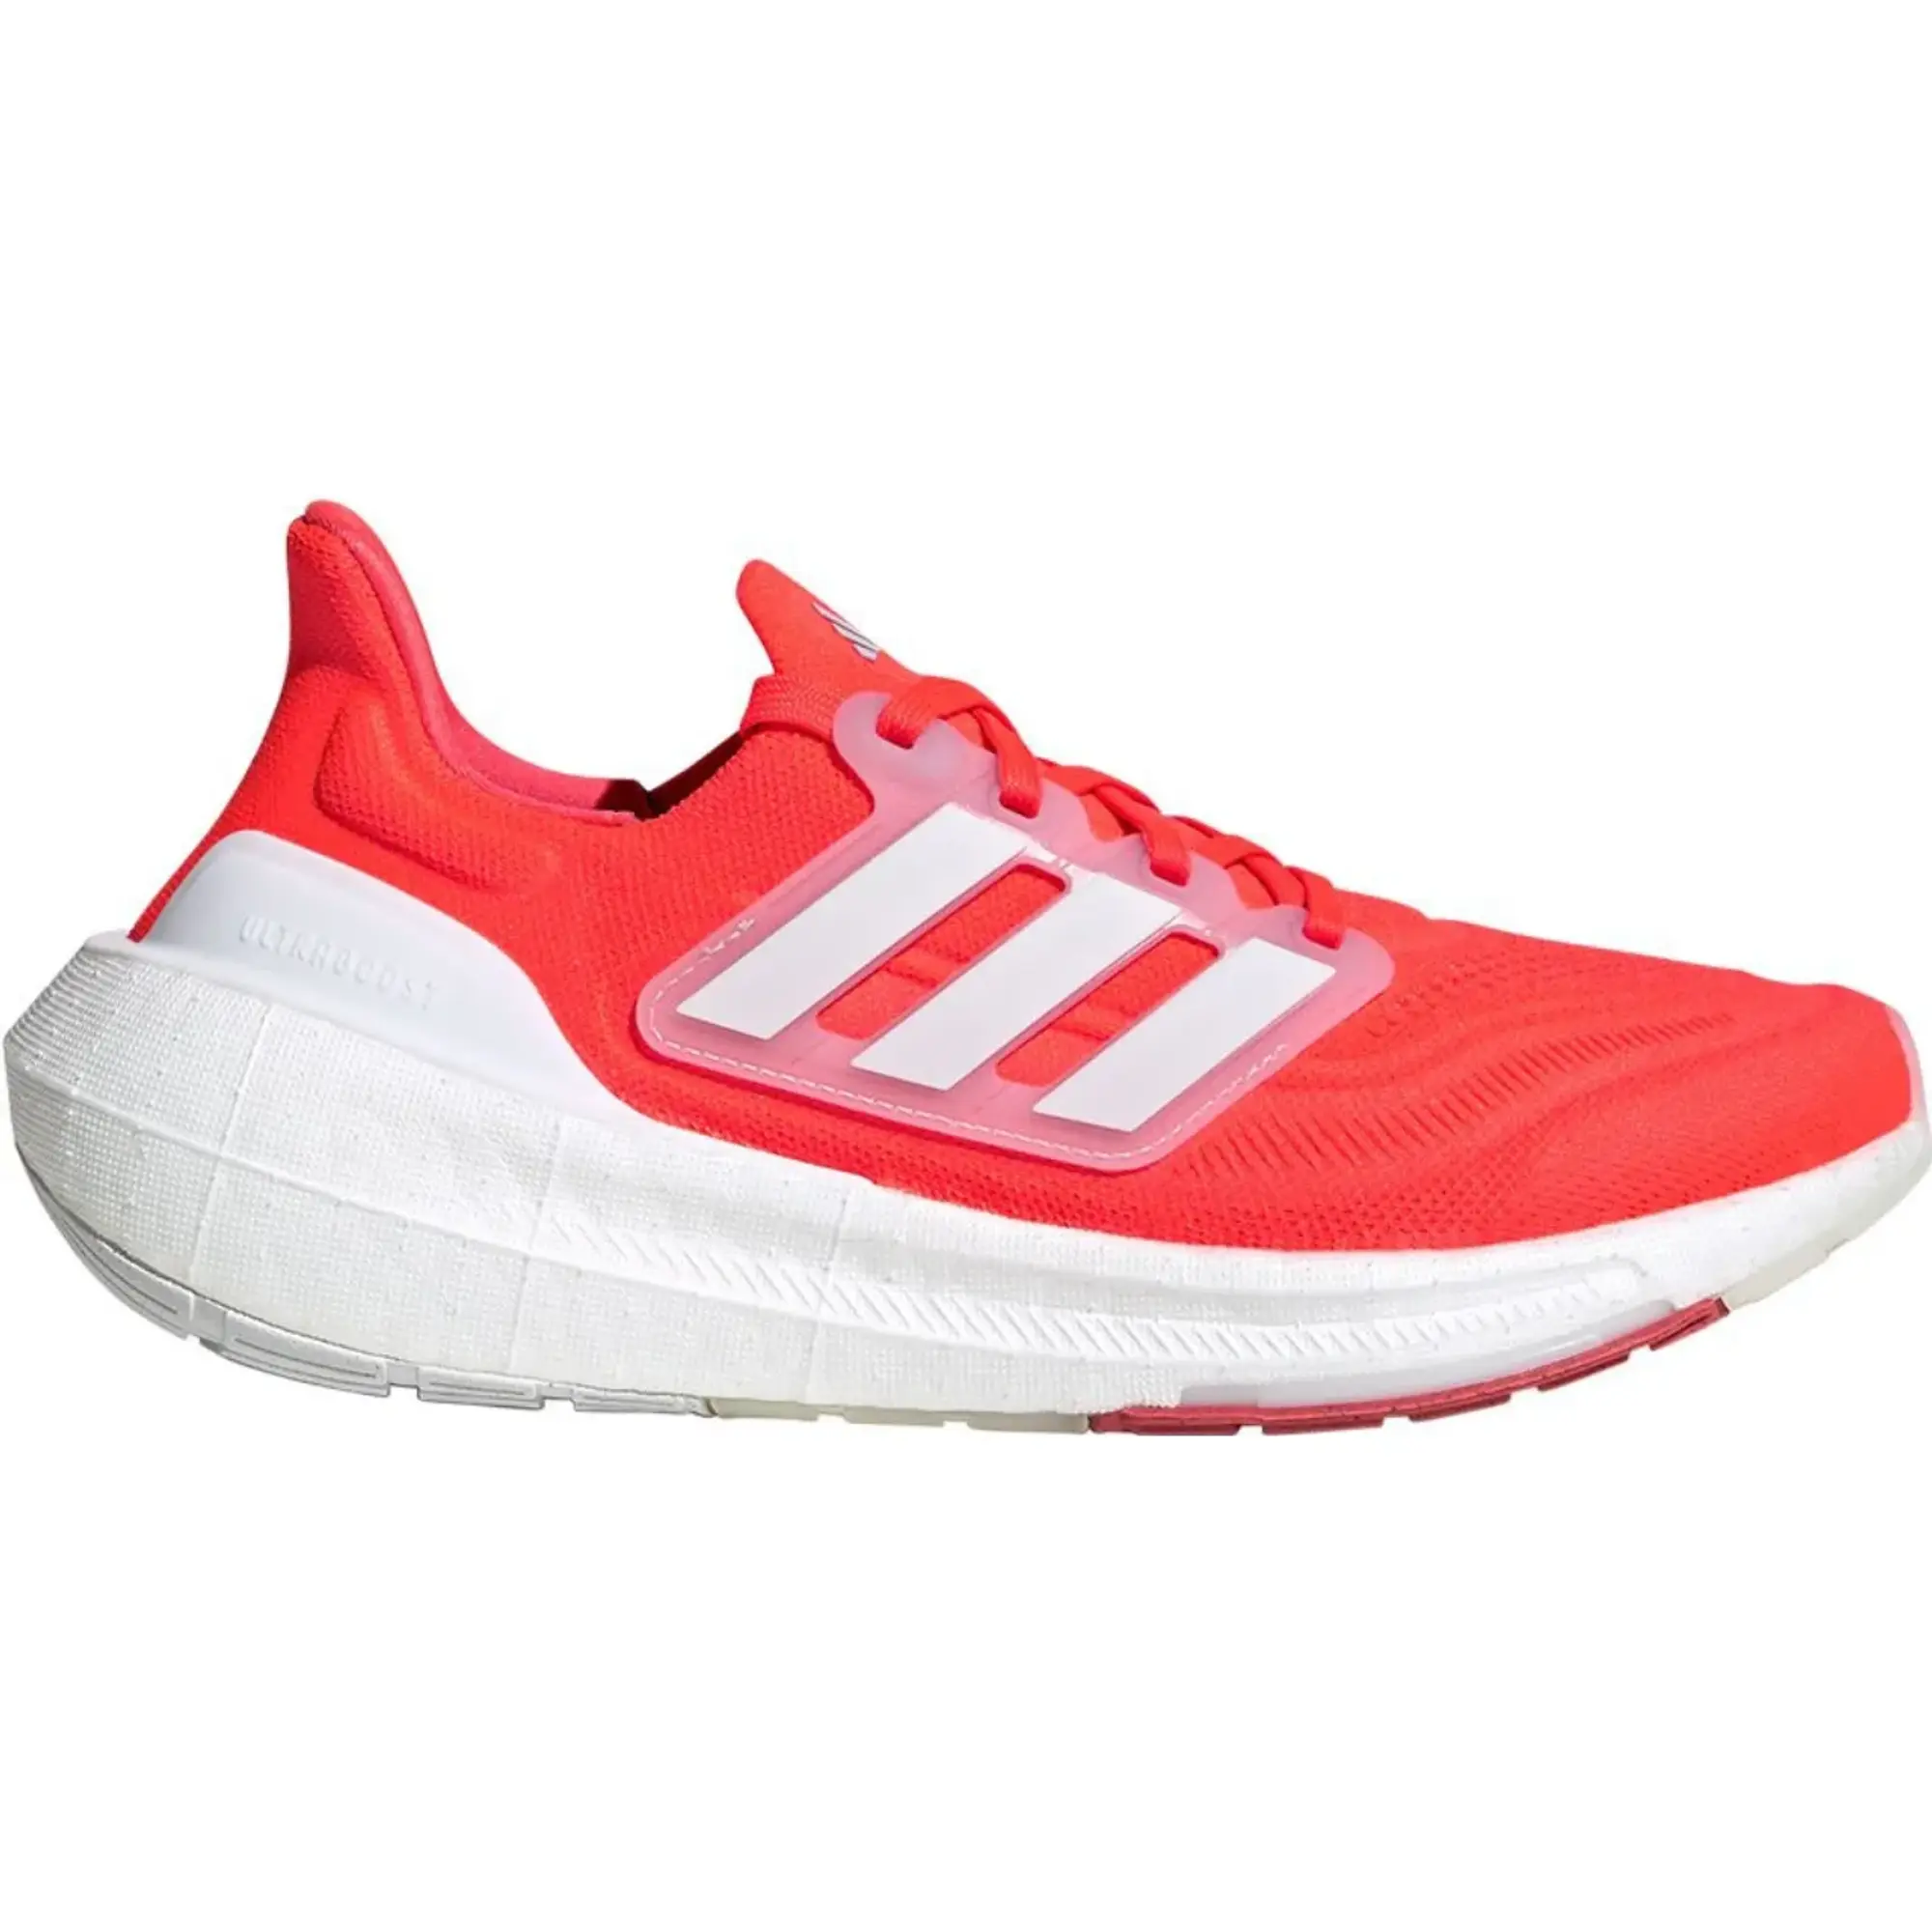 Adidas Ultraboost Light Running Shoes  - Red